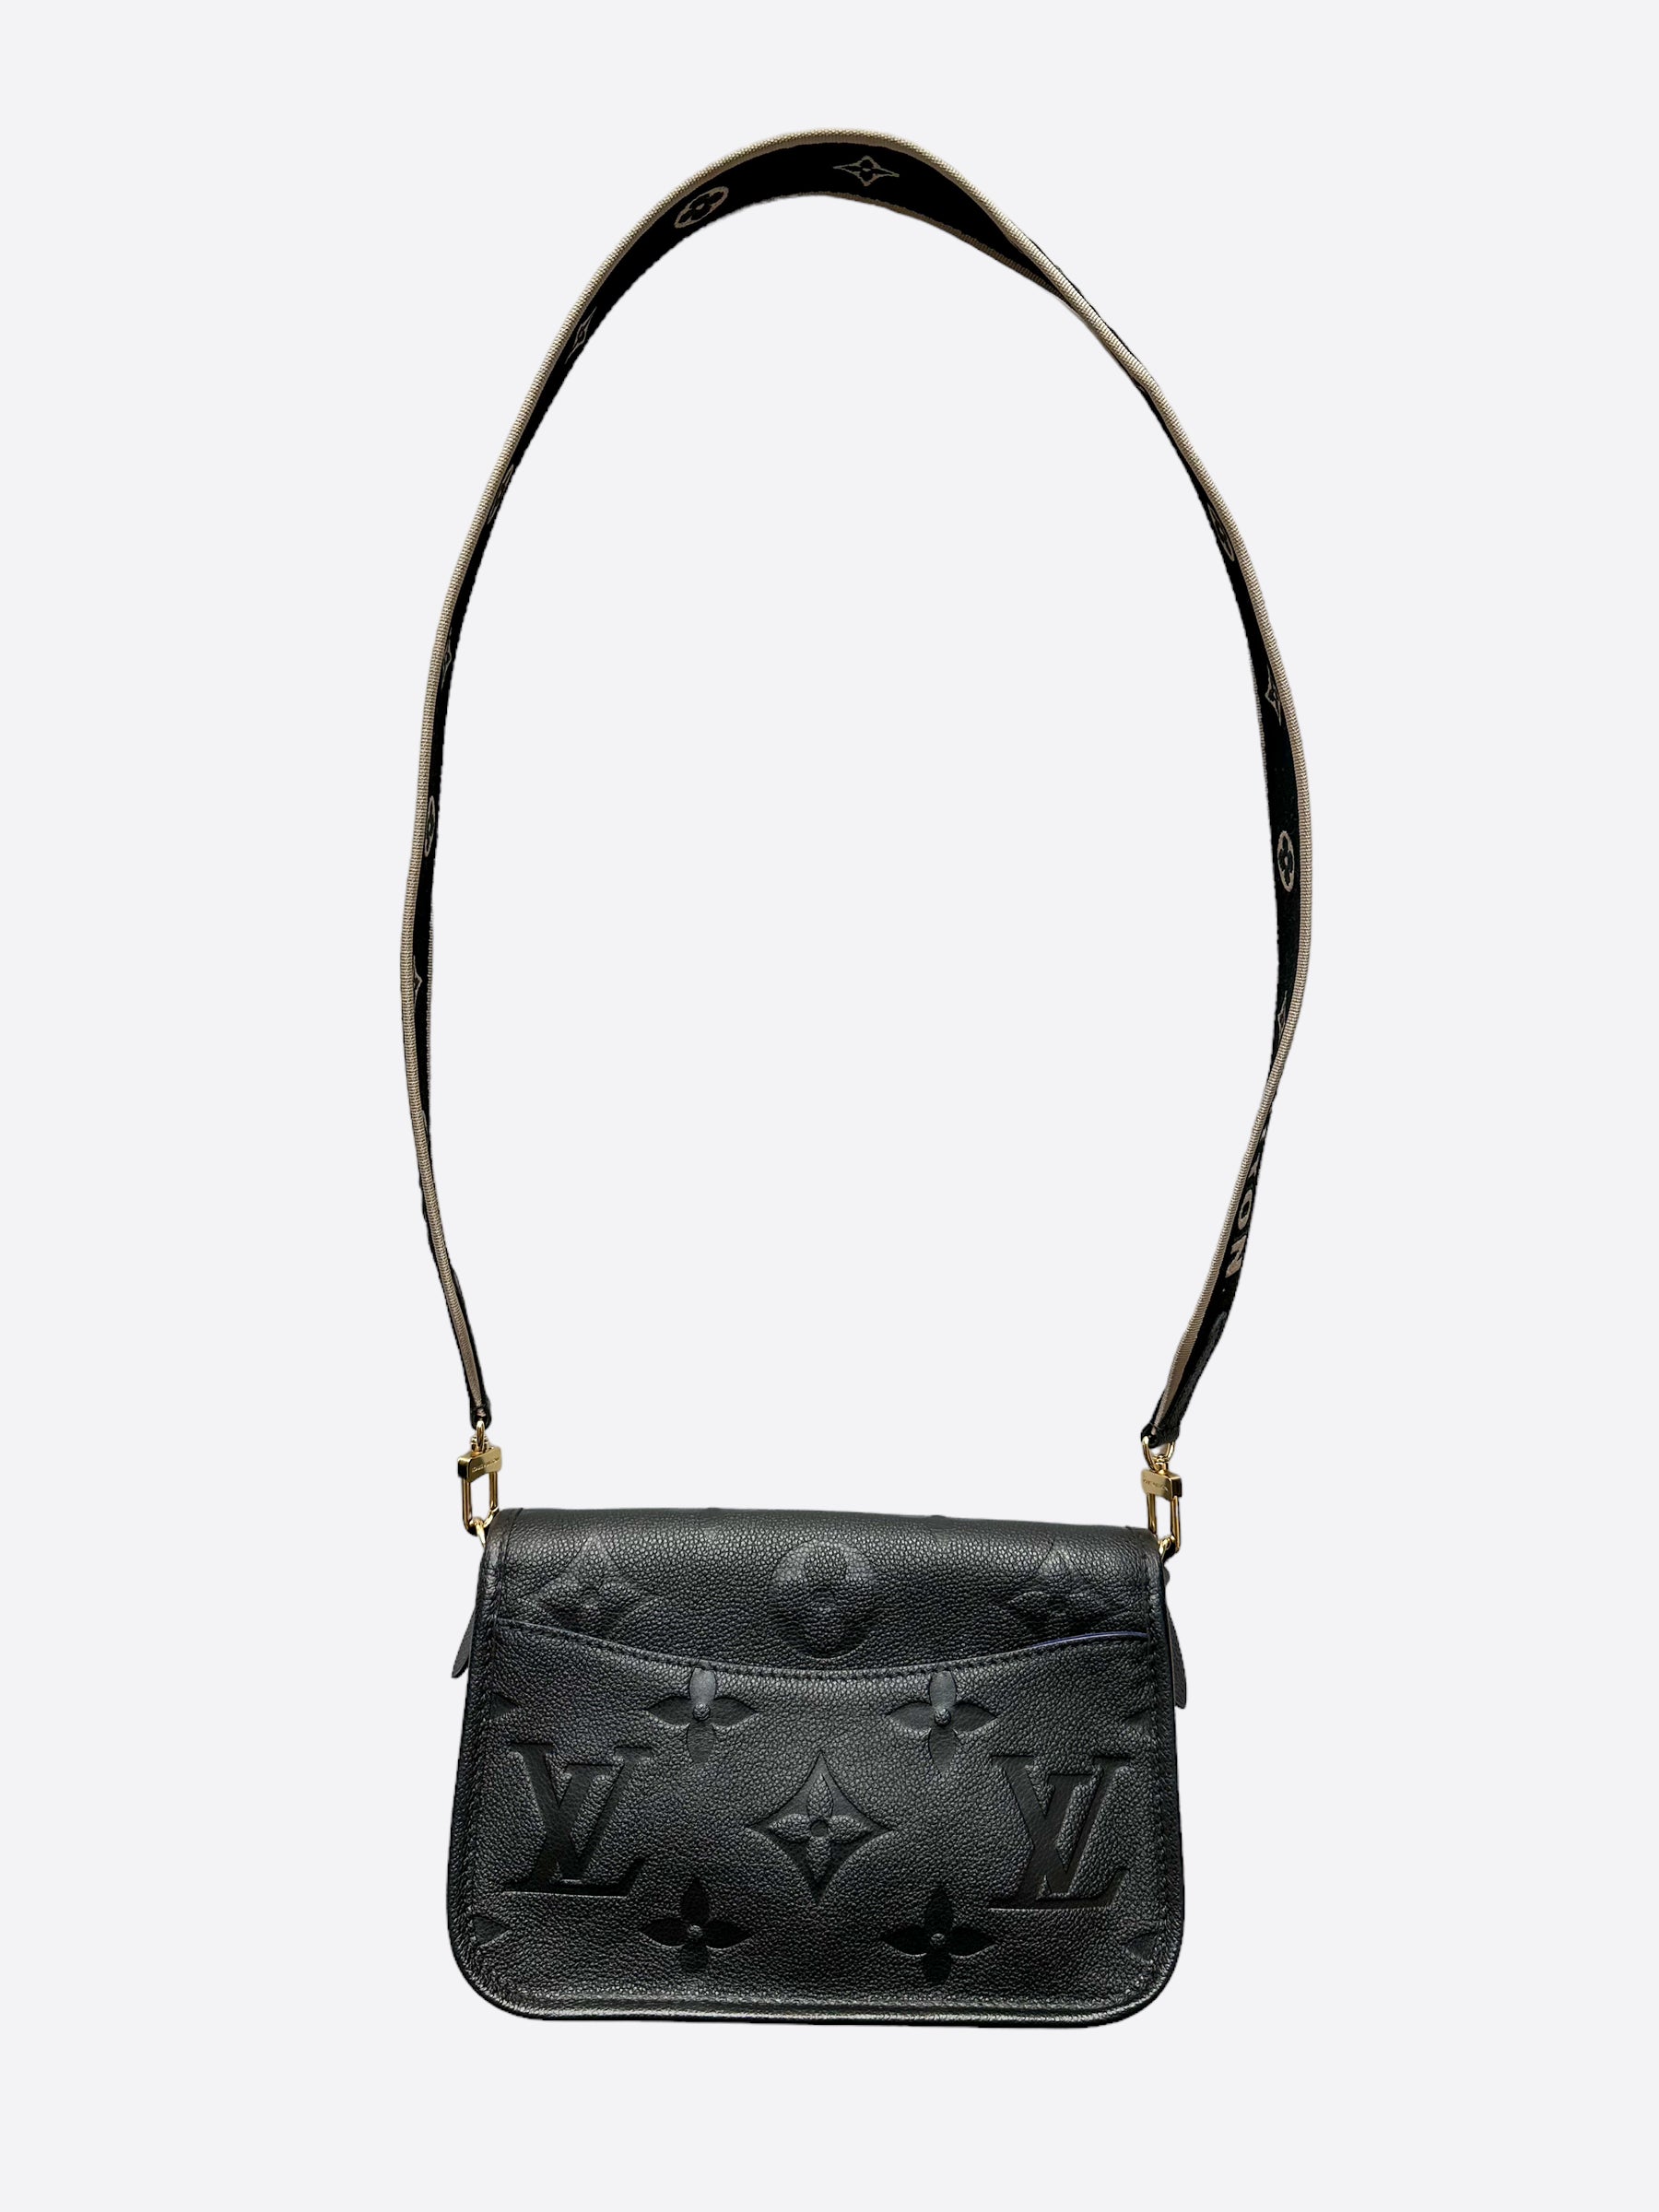 Louis Vuitton Diane Monogram Black - Tabita Bags – Tabita Bags